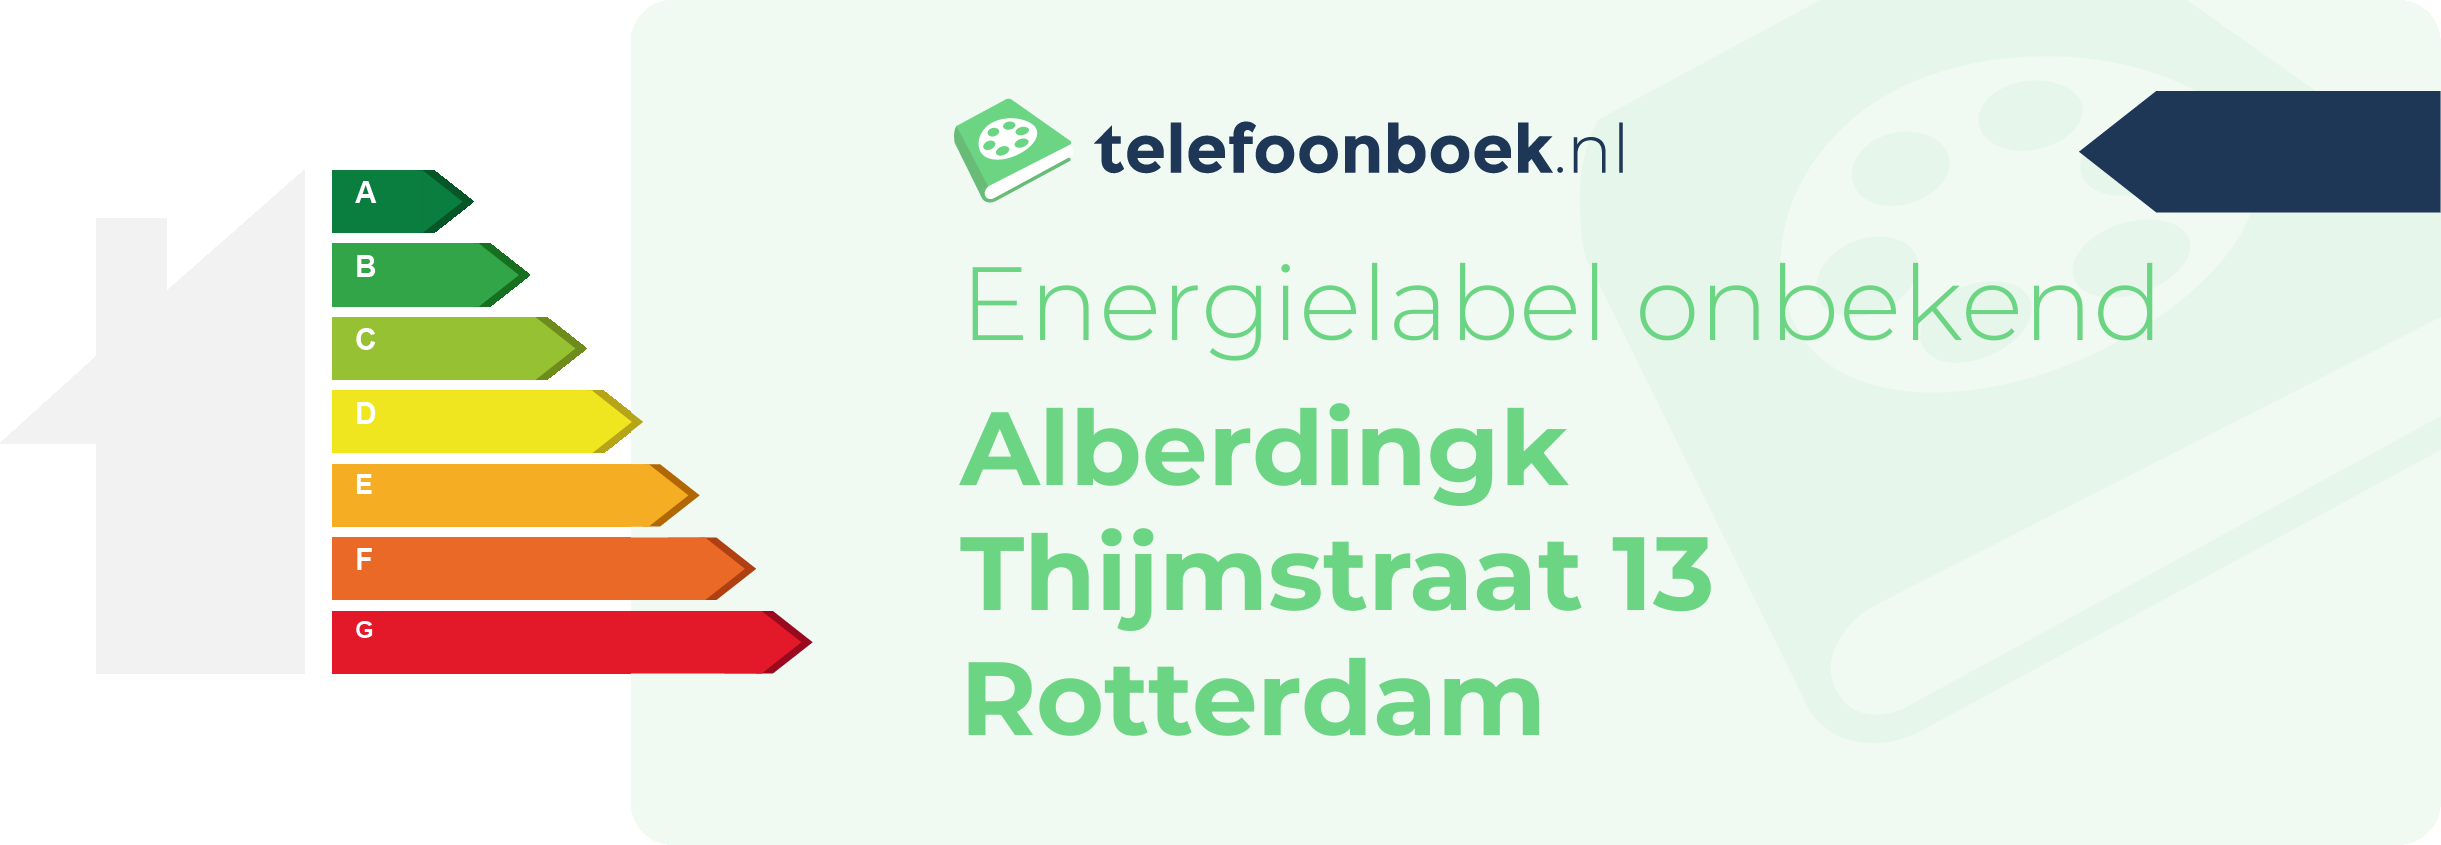 Energielabel Alberdingk Thijmstraat 13 Rotterdam